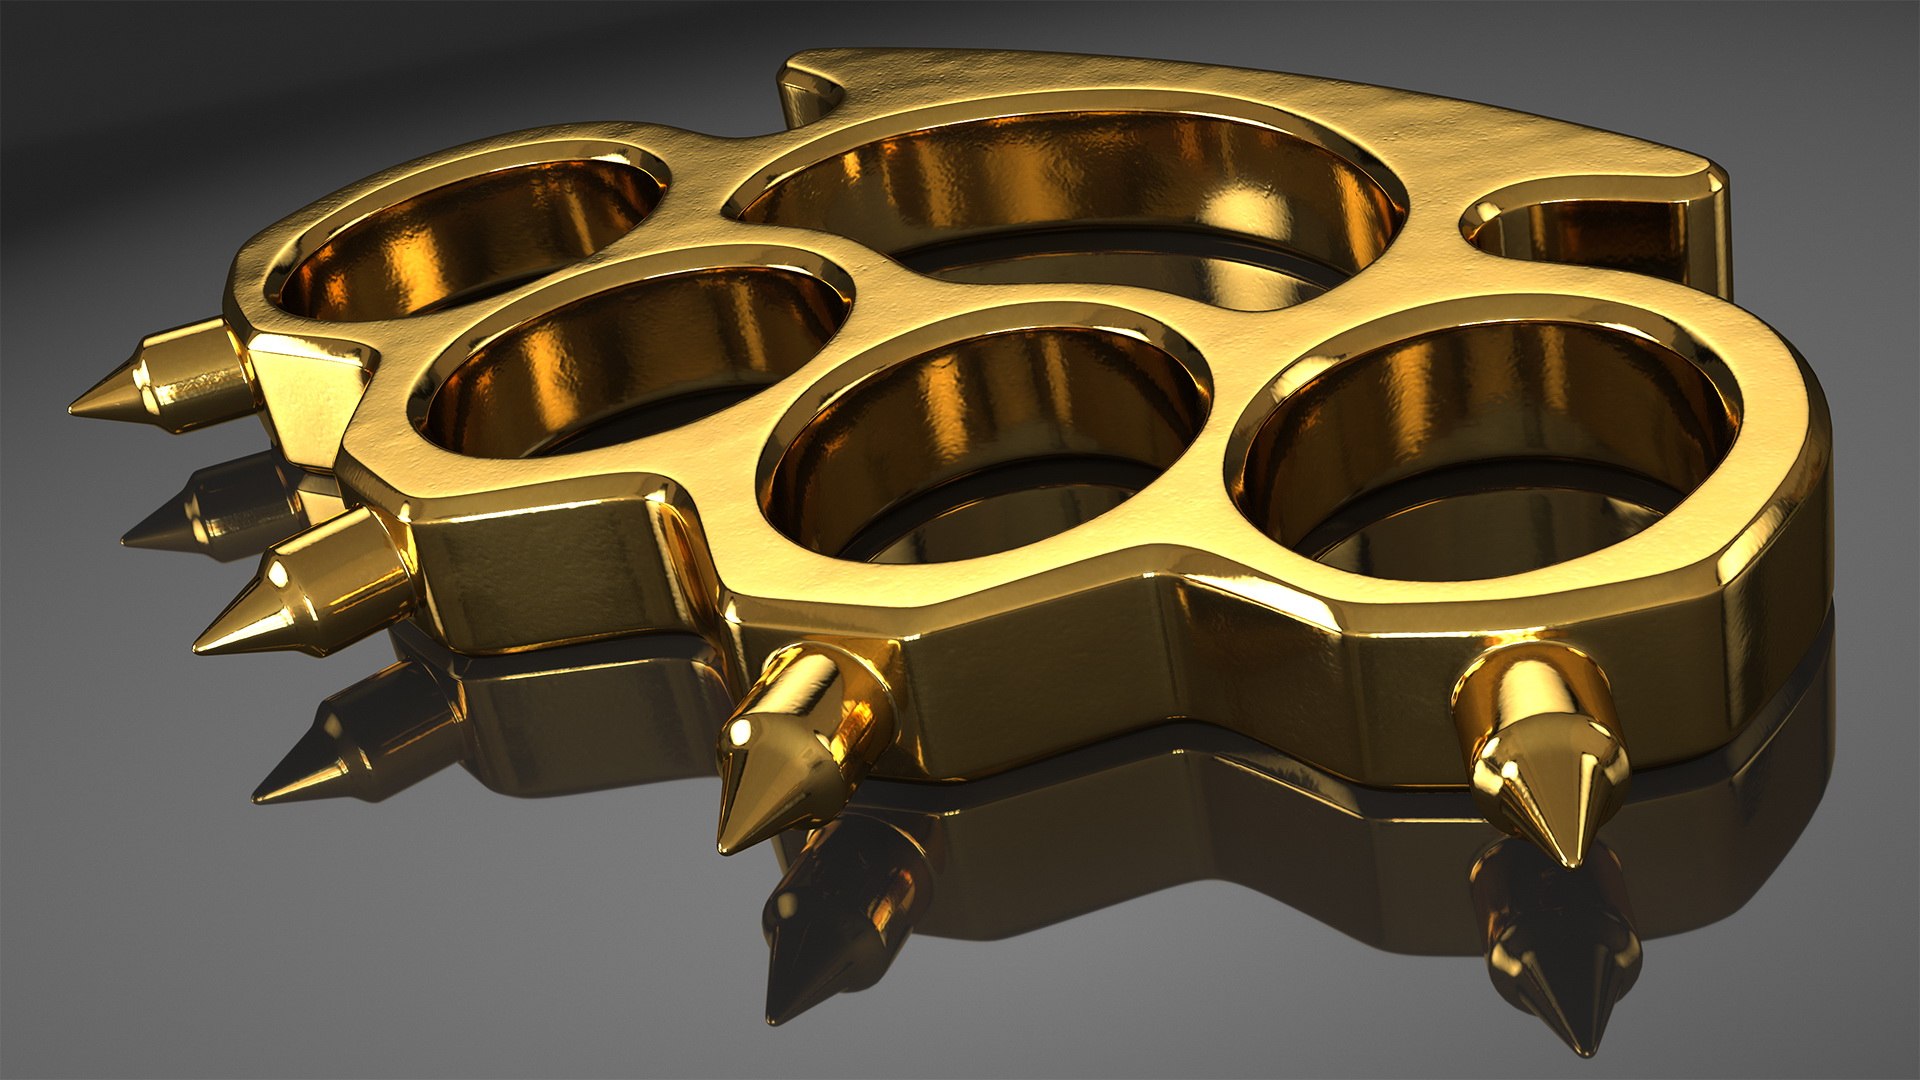 spiked brass knuckles 3D model 3D printable